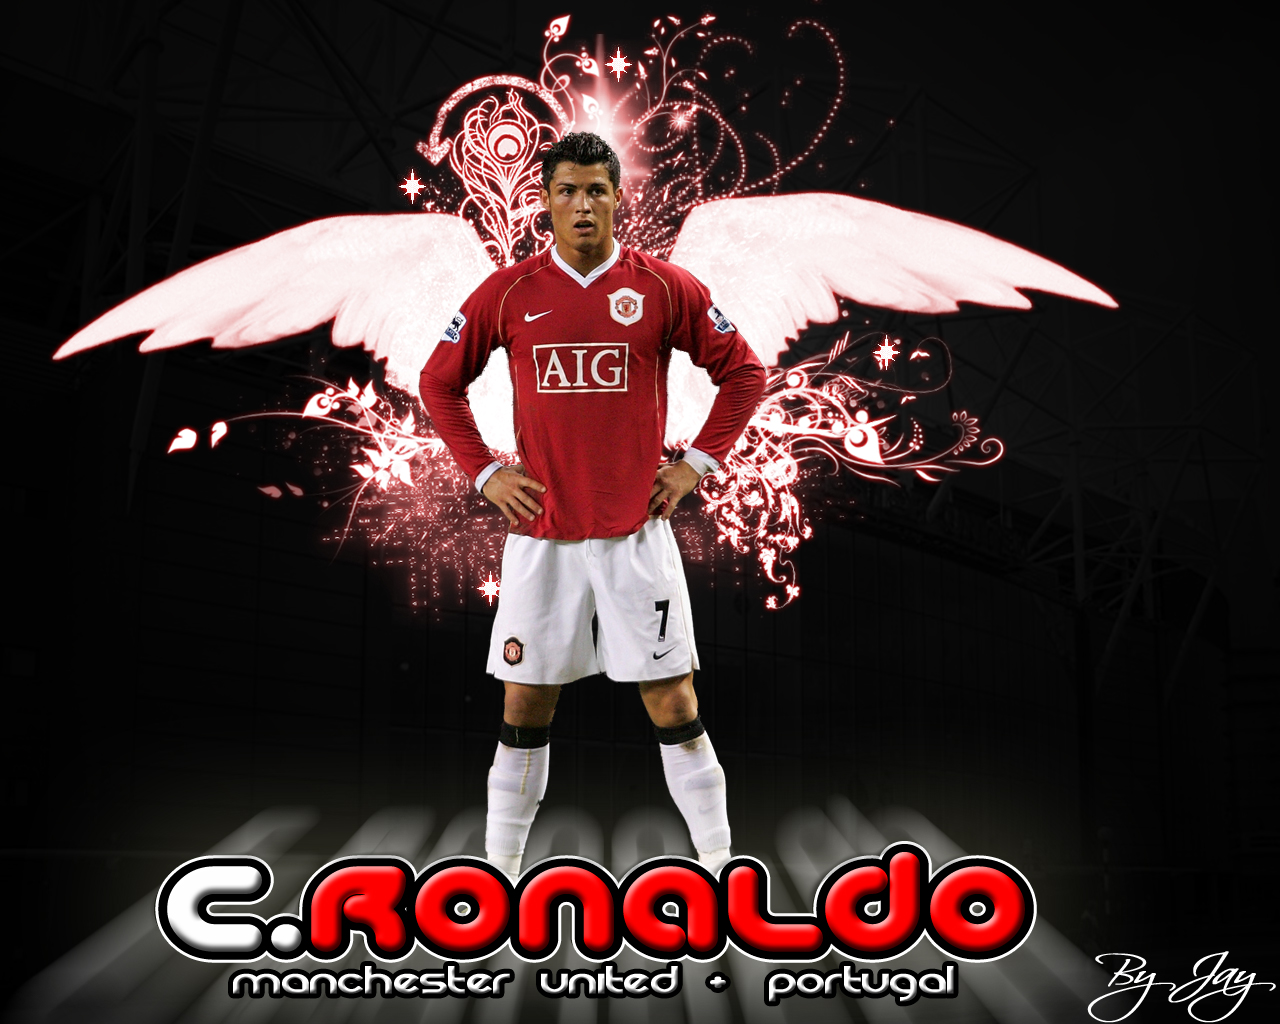 http://1.bp.blogspot.com/-4u_U9Zcssrc/TxbdF_xRYYI/AAAAAAAADd8/Sz39bqAZlUo/s1600/cristiano-ronaldo-footballma-united-wallpaper.jpg